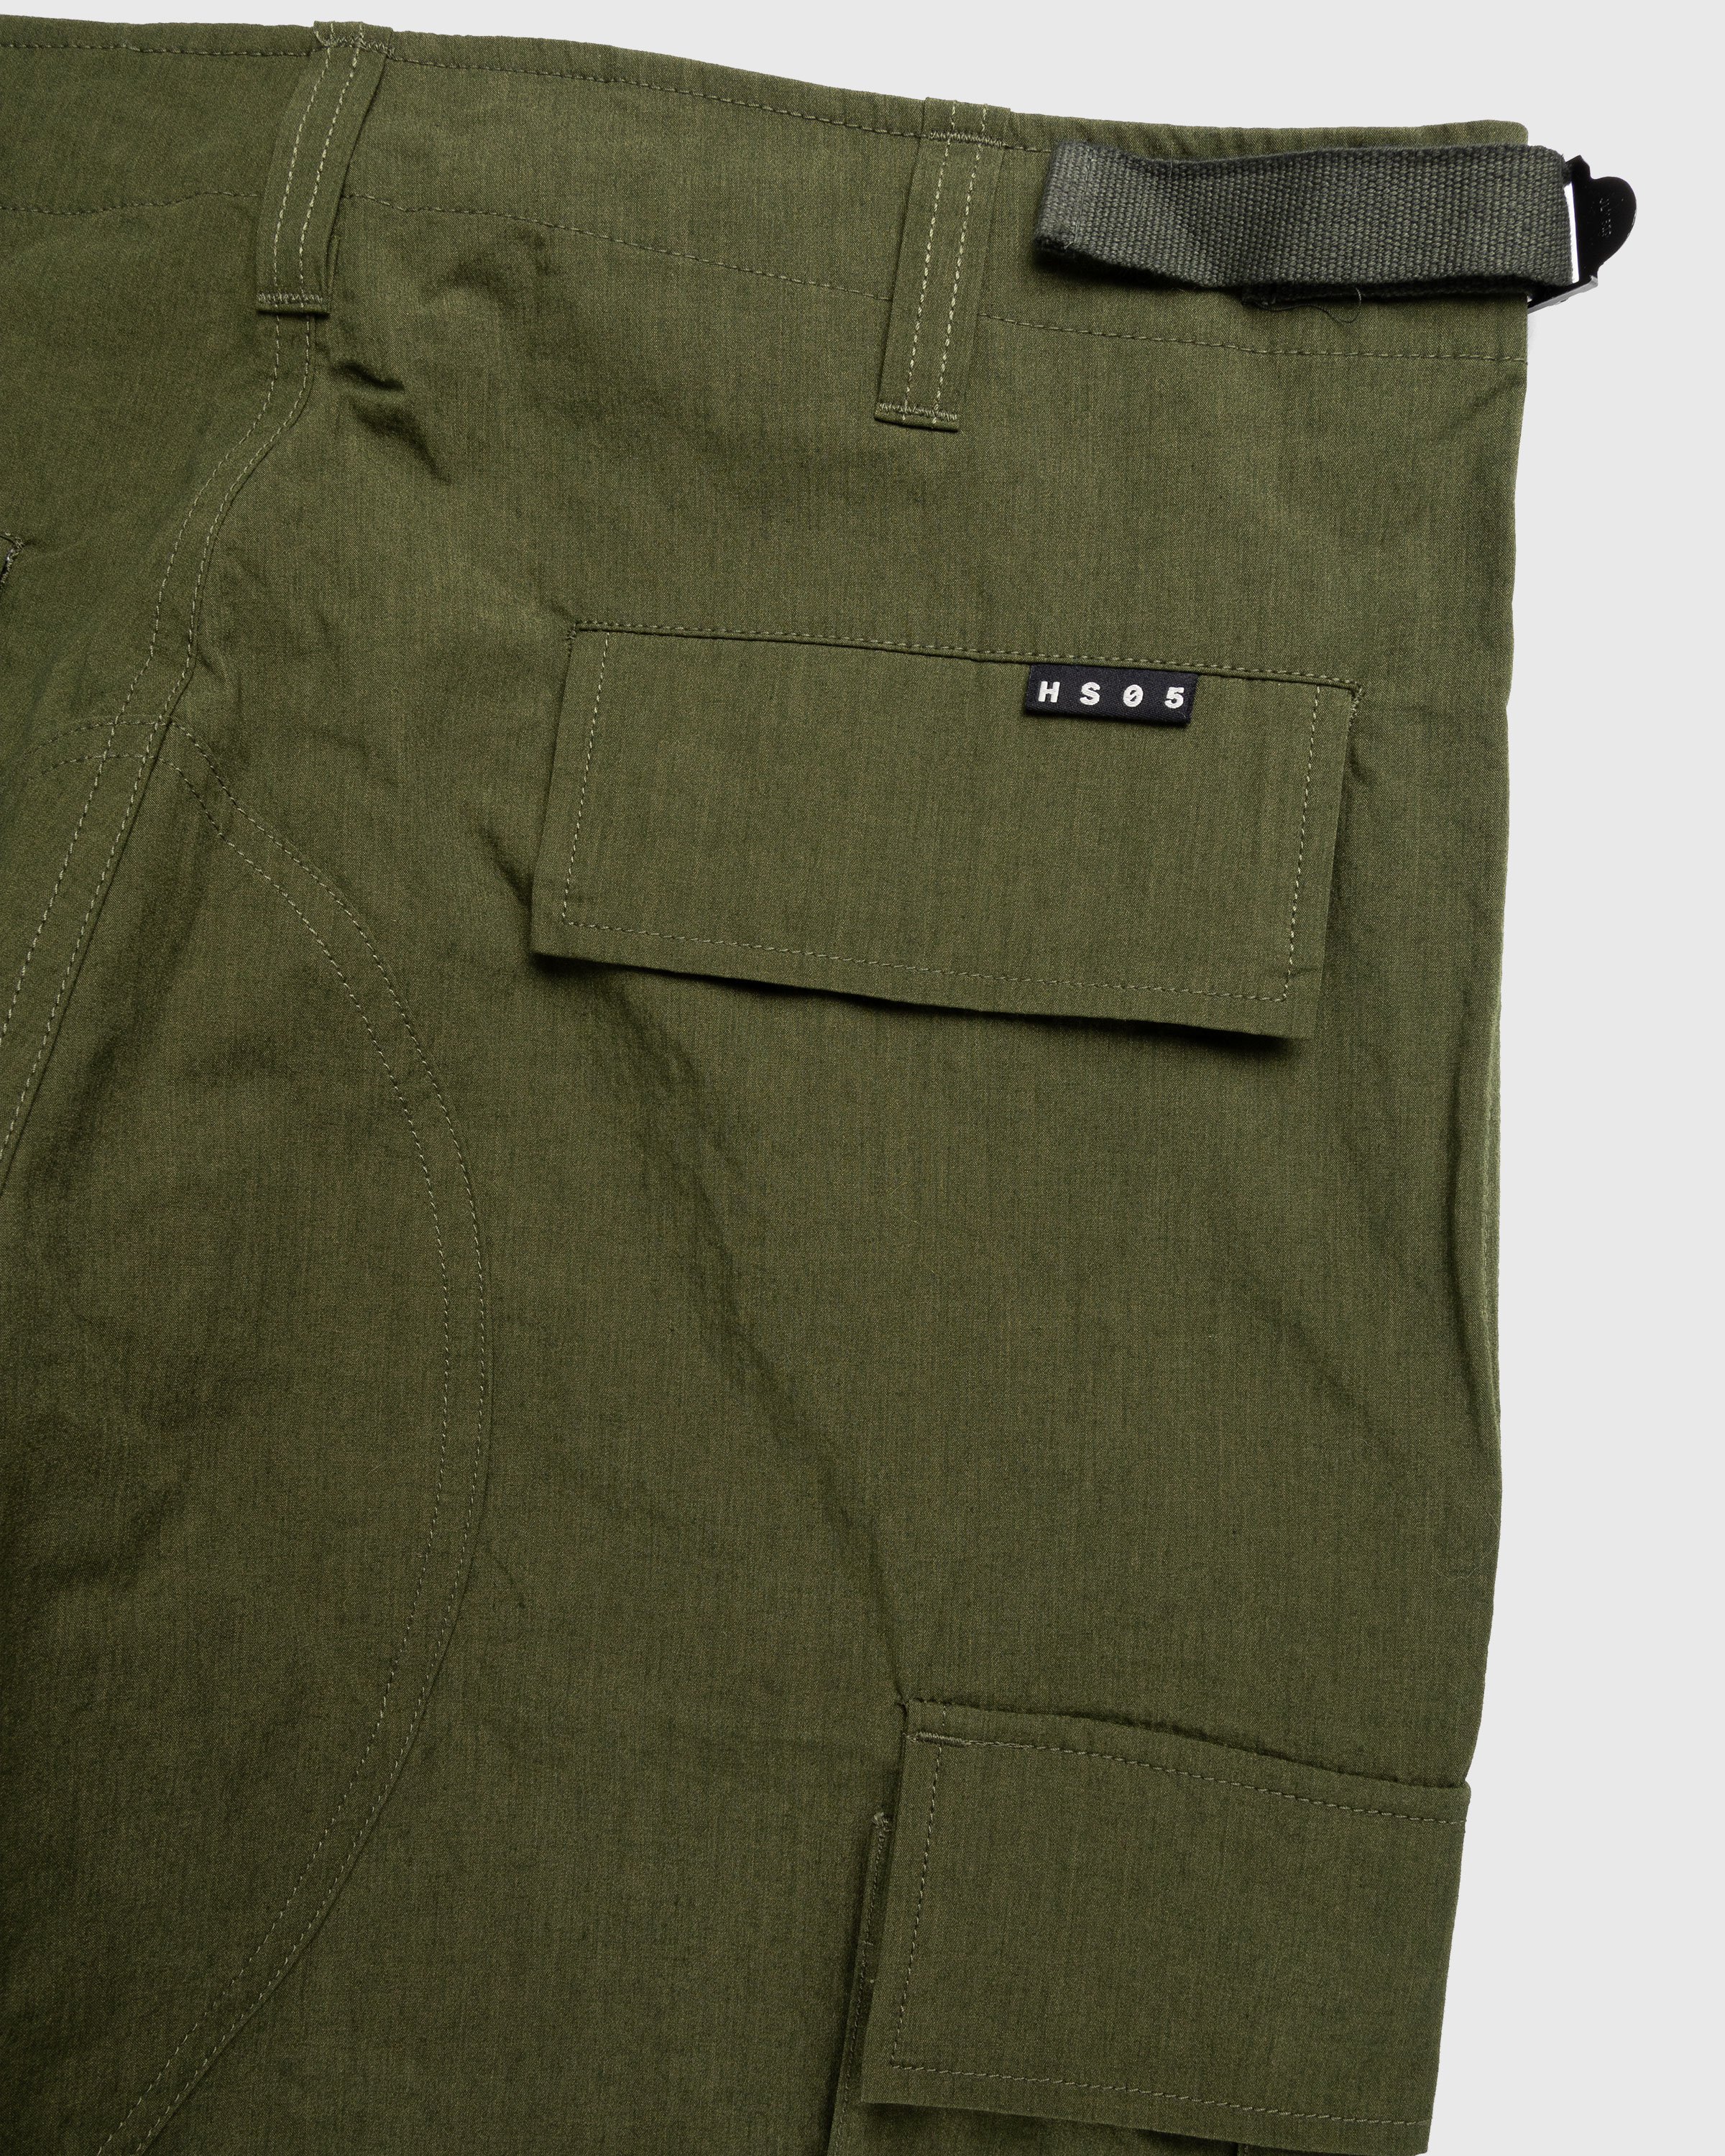 Highsnobiety HS05 - Re-Inforced Nylon Cargo Trouser Khaki - Clothing - Green - Image 7